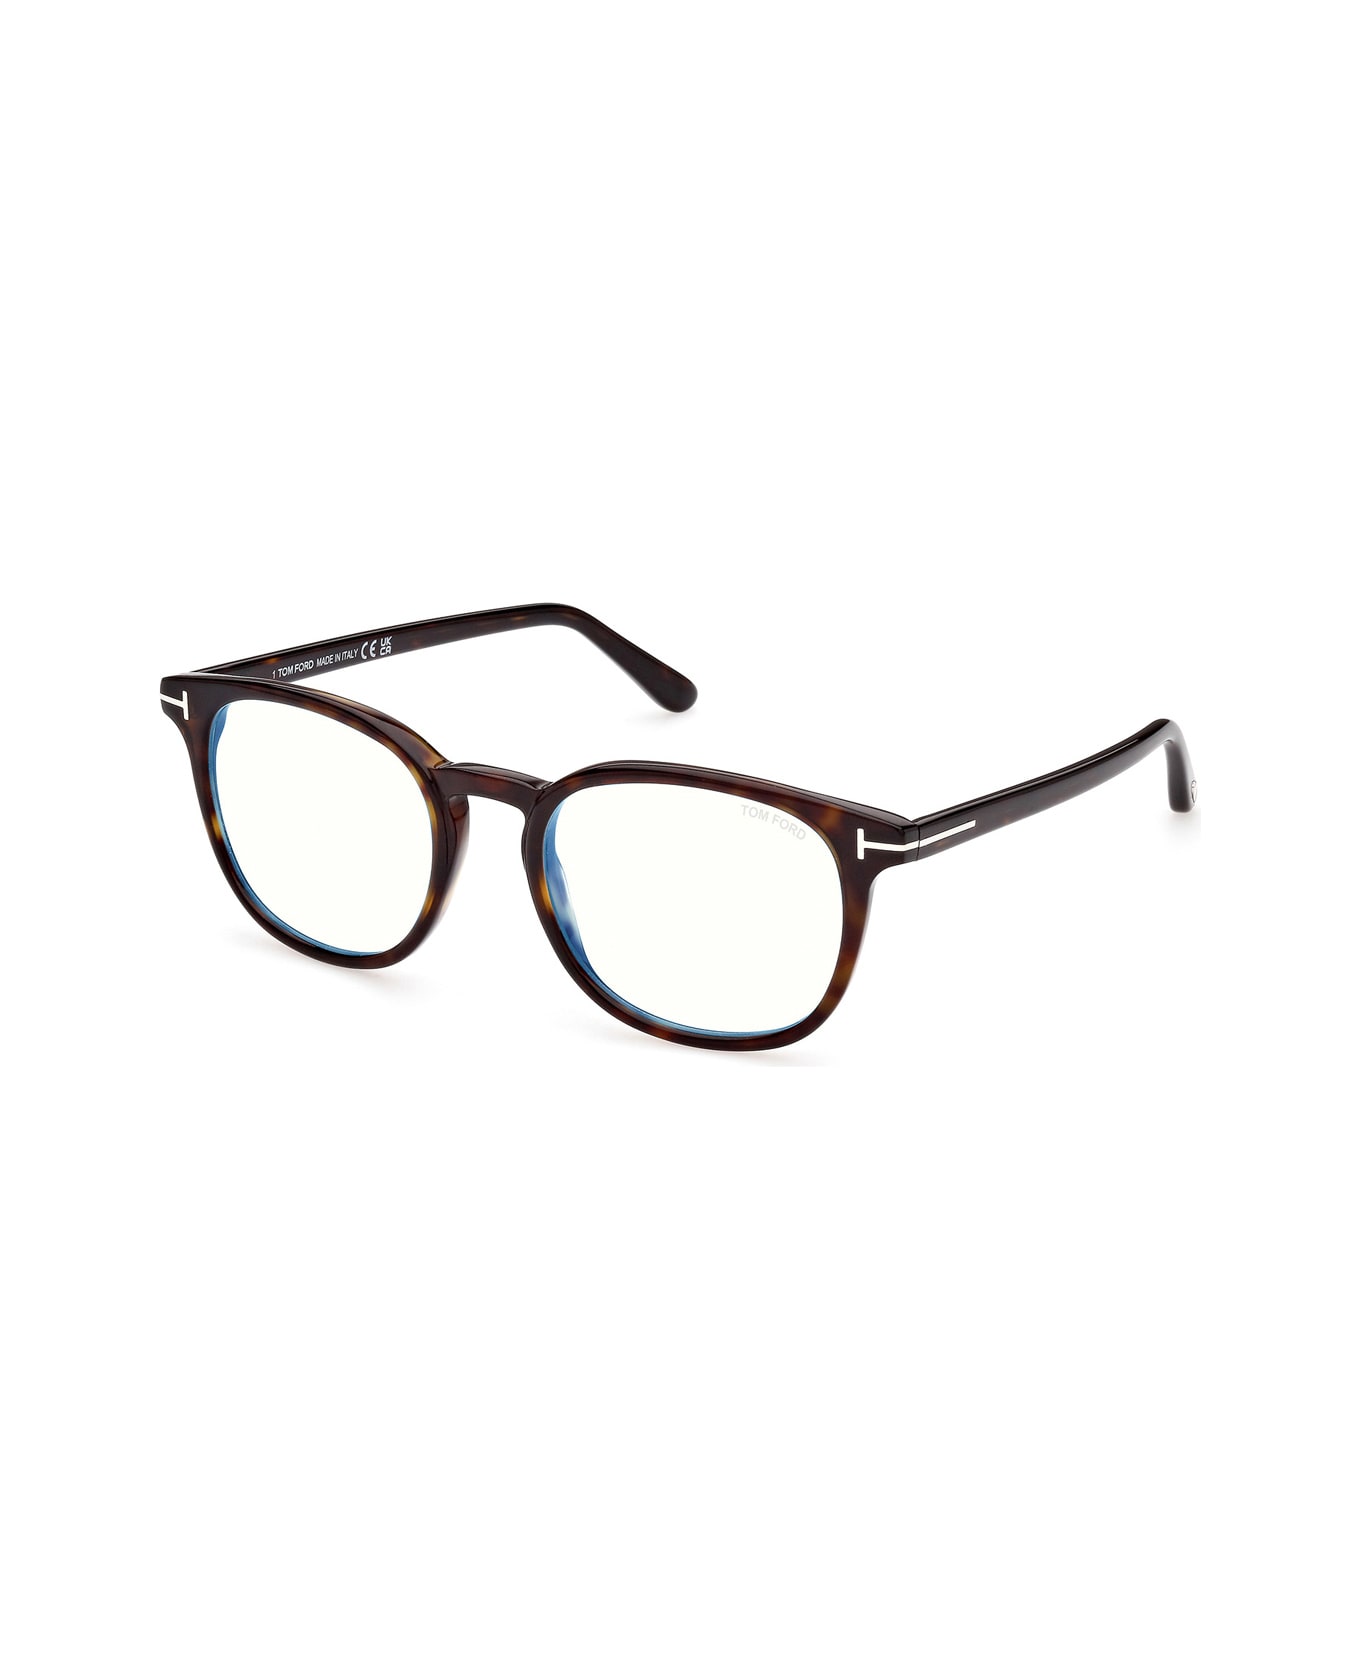 Tom Ford Eyewear Ft5819 Glasses - Marrone アイウェア